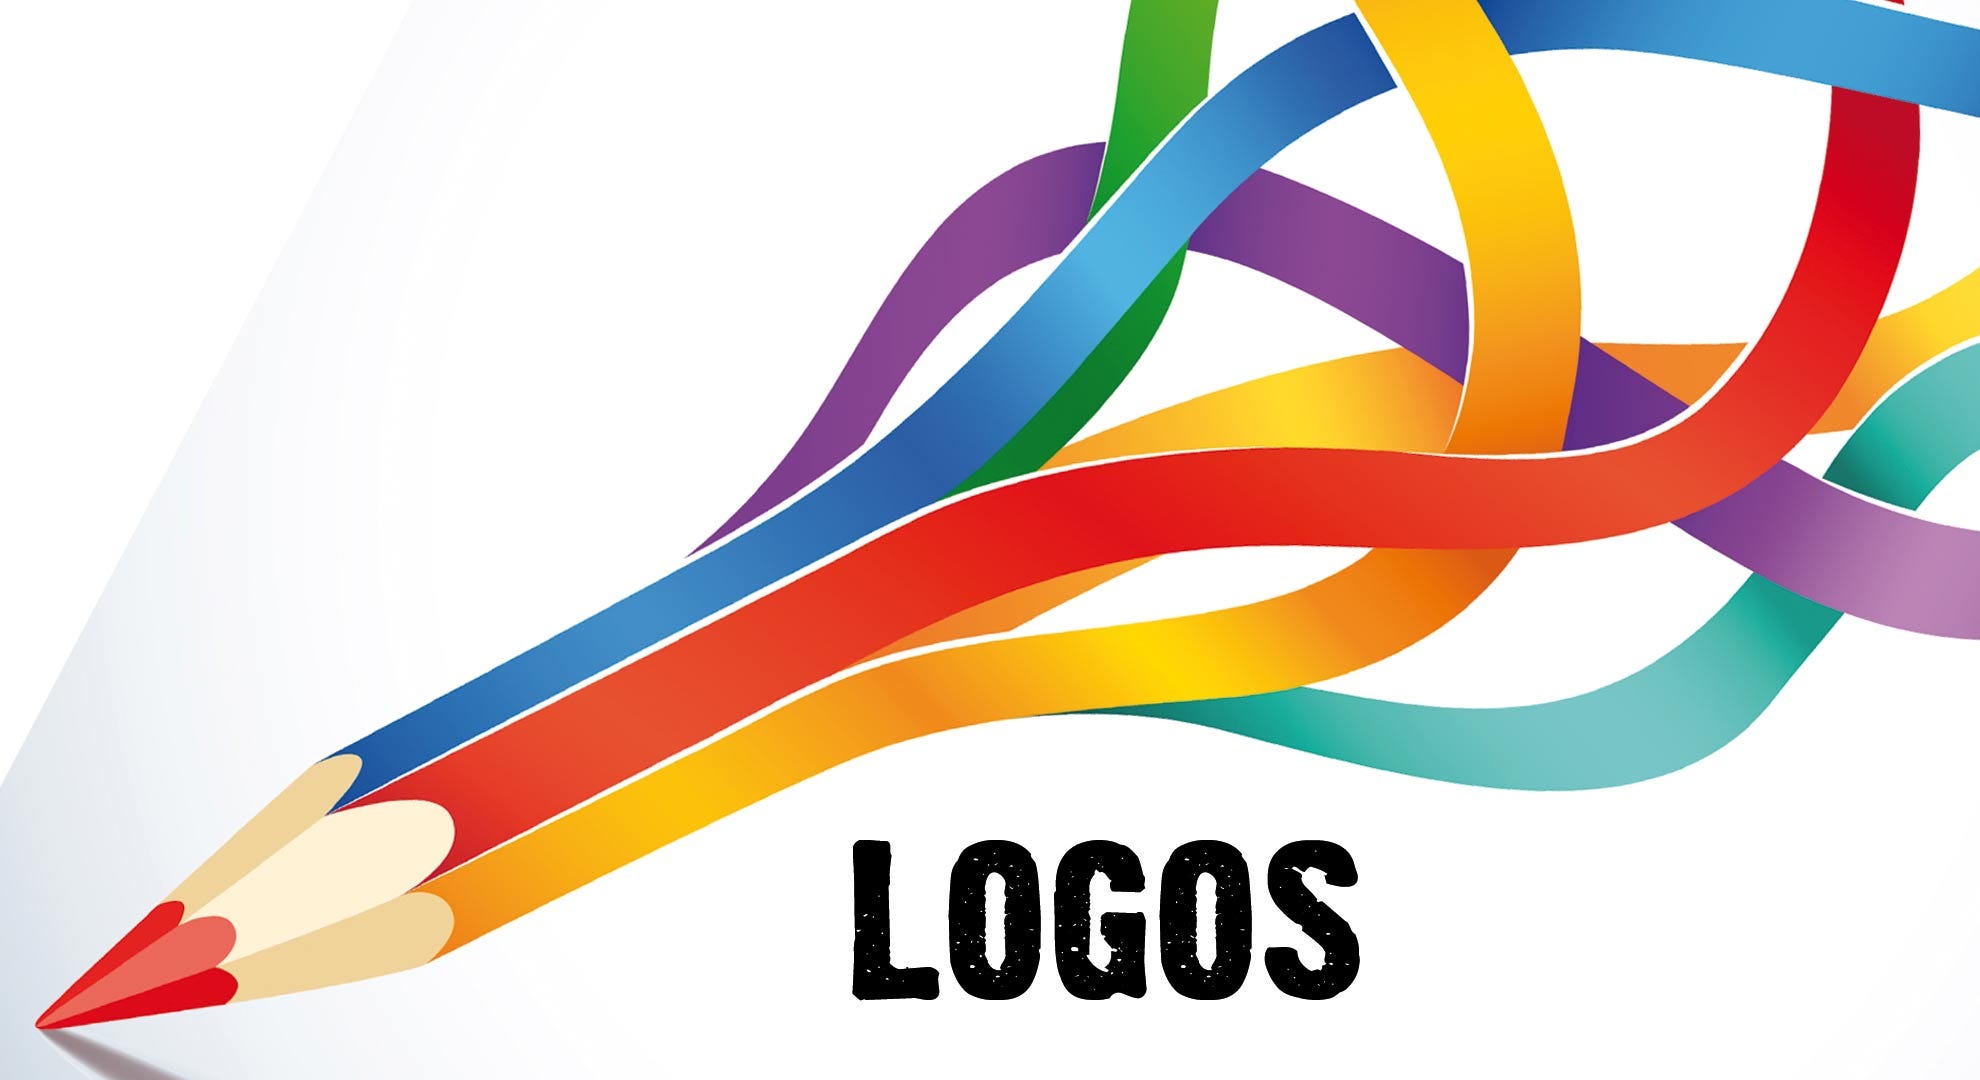  Desain  Logo  Baju  Online Klopdesain